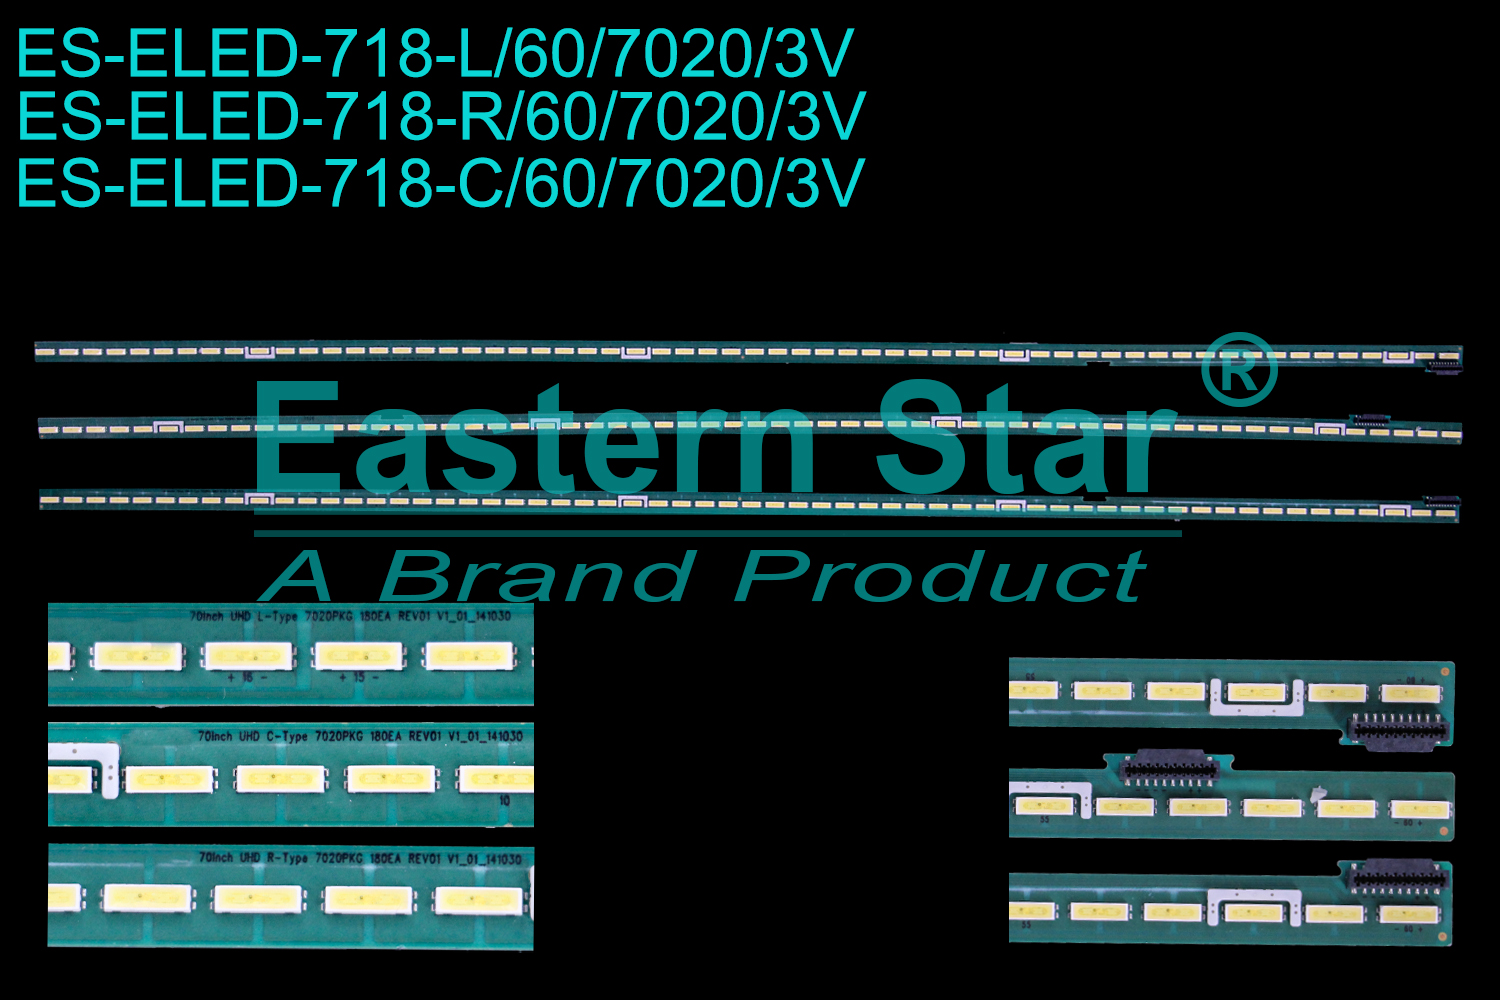 ES-ELED-718 ELED/EDGE TV backlight use for 49'' Lg L: 70inch UHD L-Type 7020PKG 180EA REV01 V1_01_141030 1526  R:  70inch UHD R-Type 7020PKG 180EA REV01 V1_01_141030 1526  C: 70inch UHD C-Type 7020PKG 180EA REV01 V1_01_141030 1526 LED STRIPS(3)